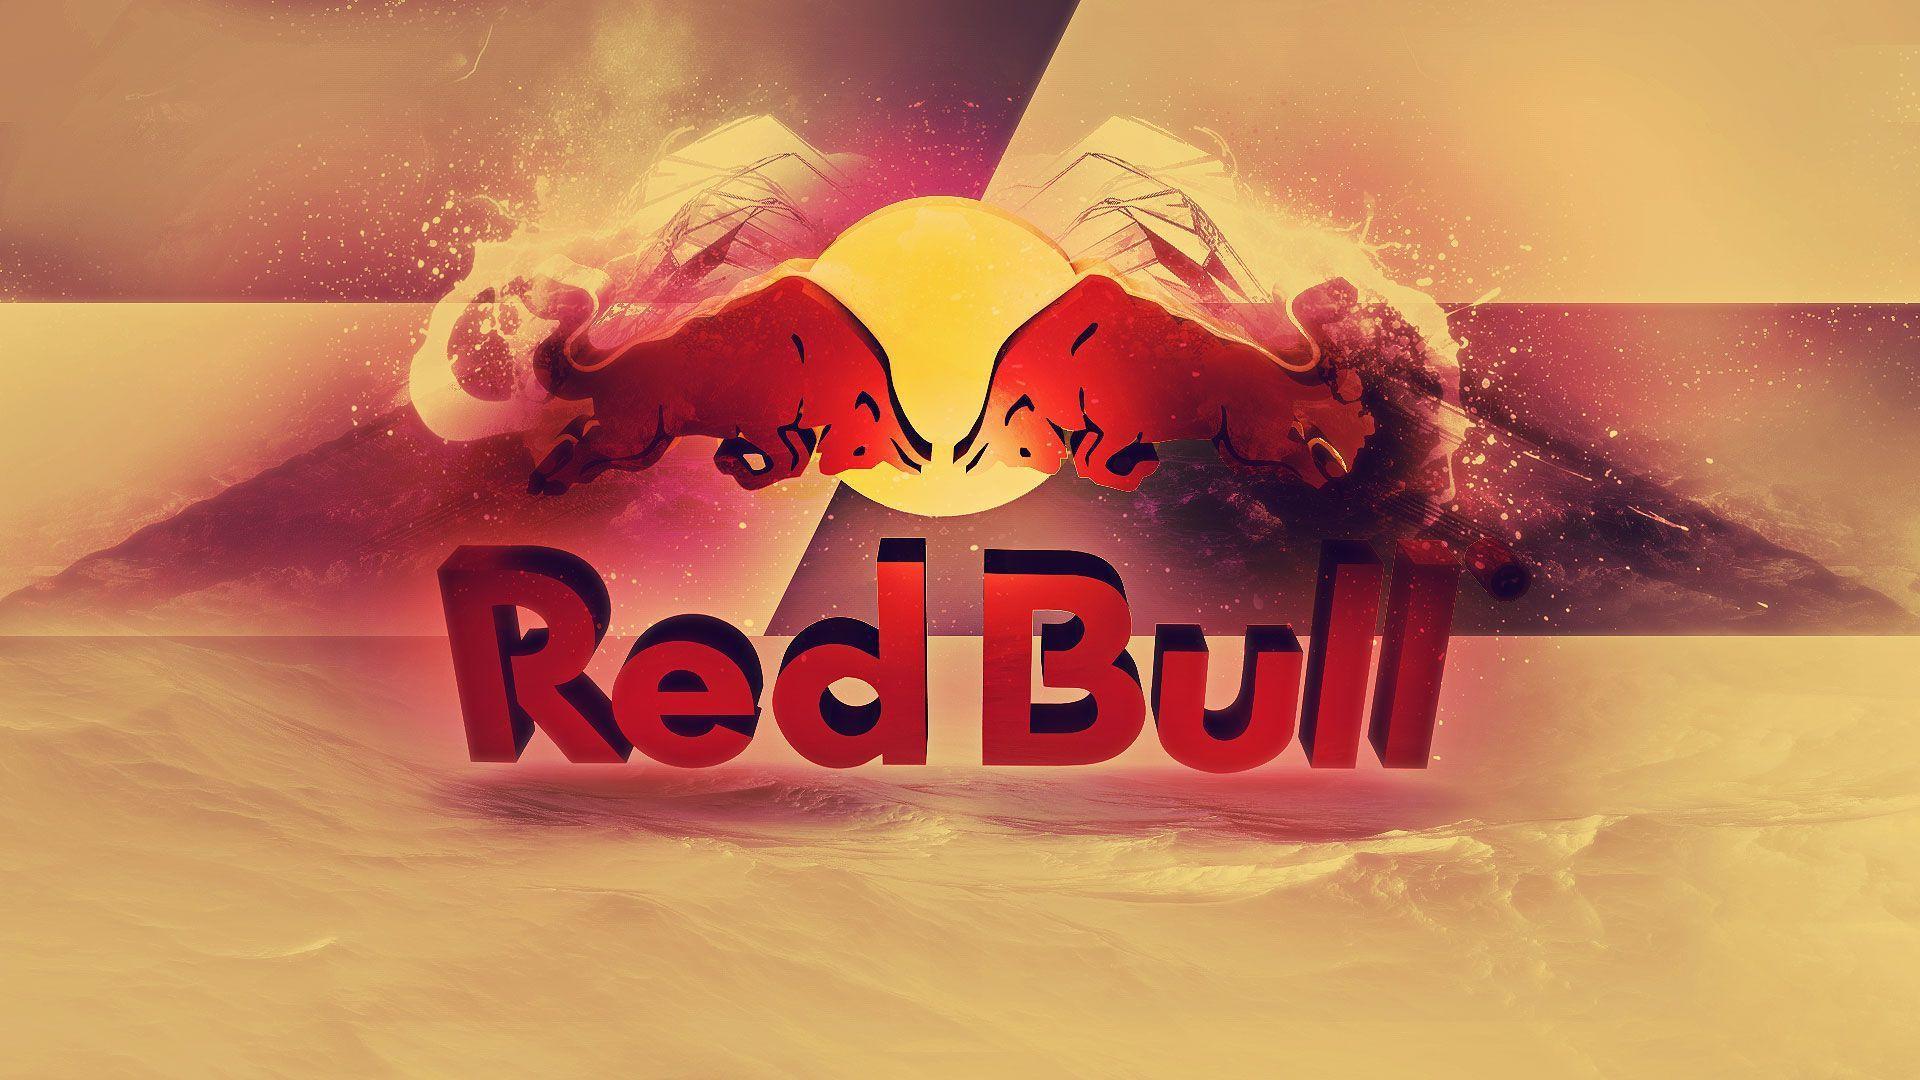 Fonds d&;écran Red Bull, tous les wallpaper Red Bull